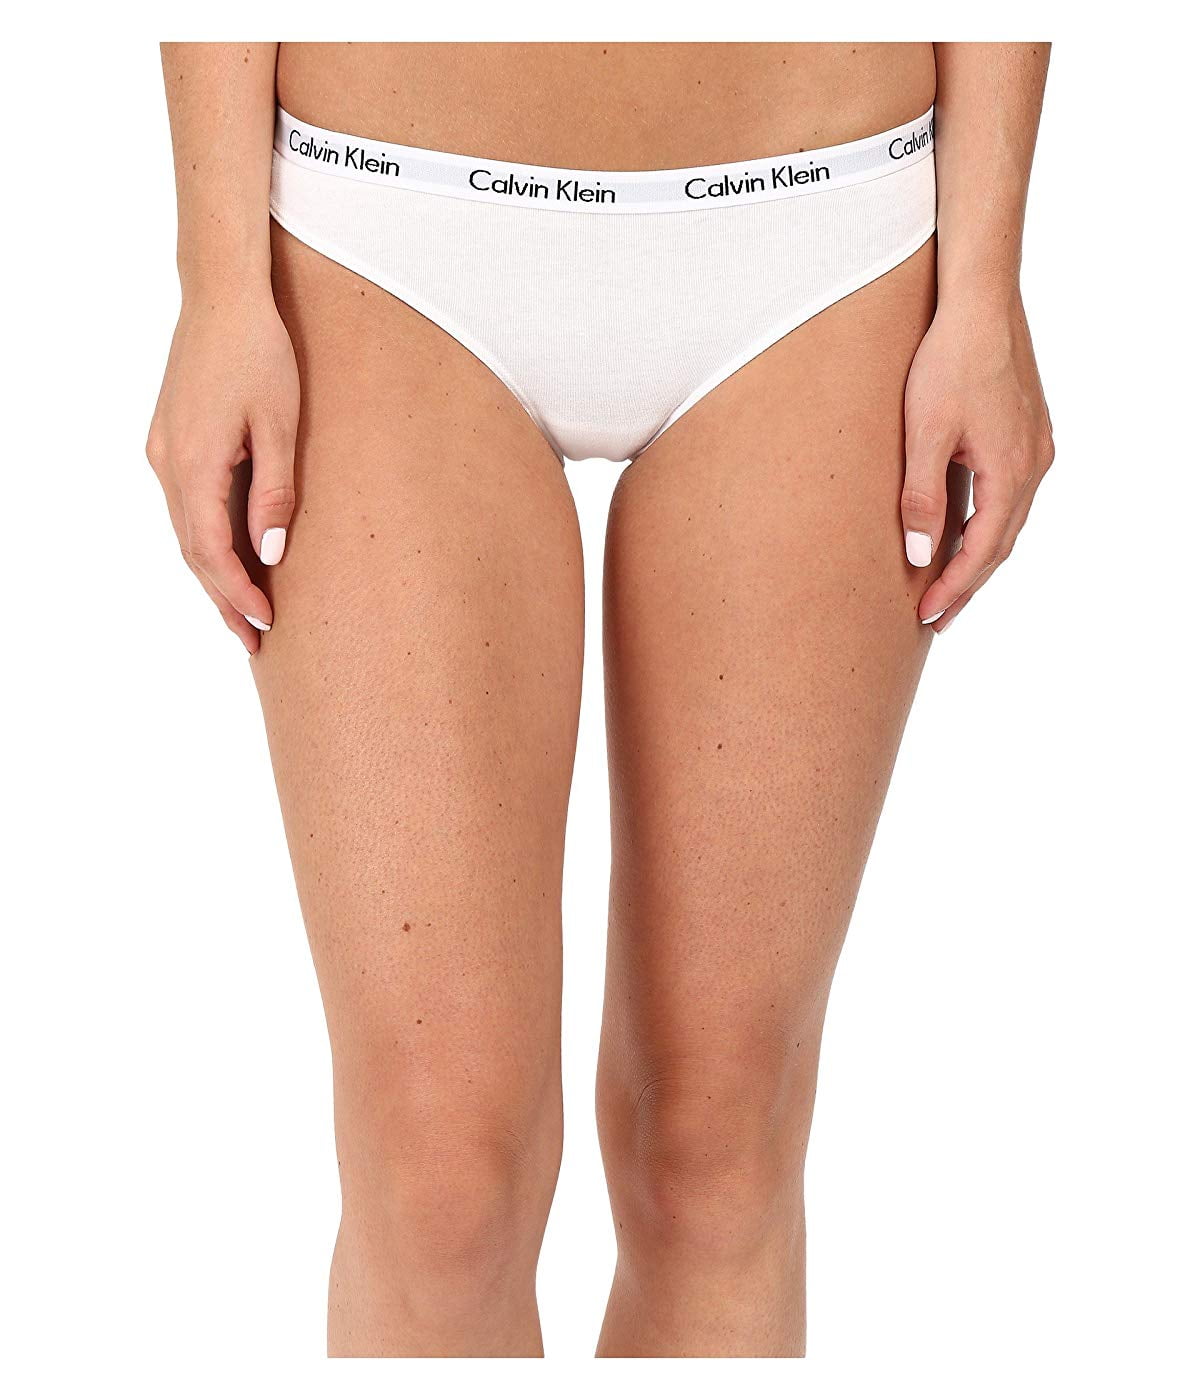 Calvin Klein Underwear Women's Carousel 3 Pack Panties, Multi, X-Large 